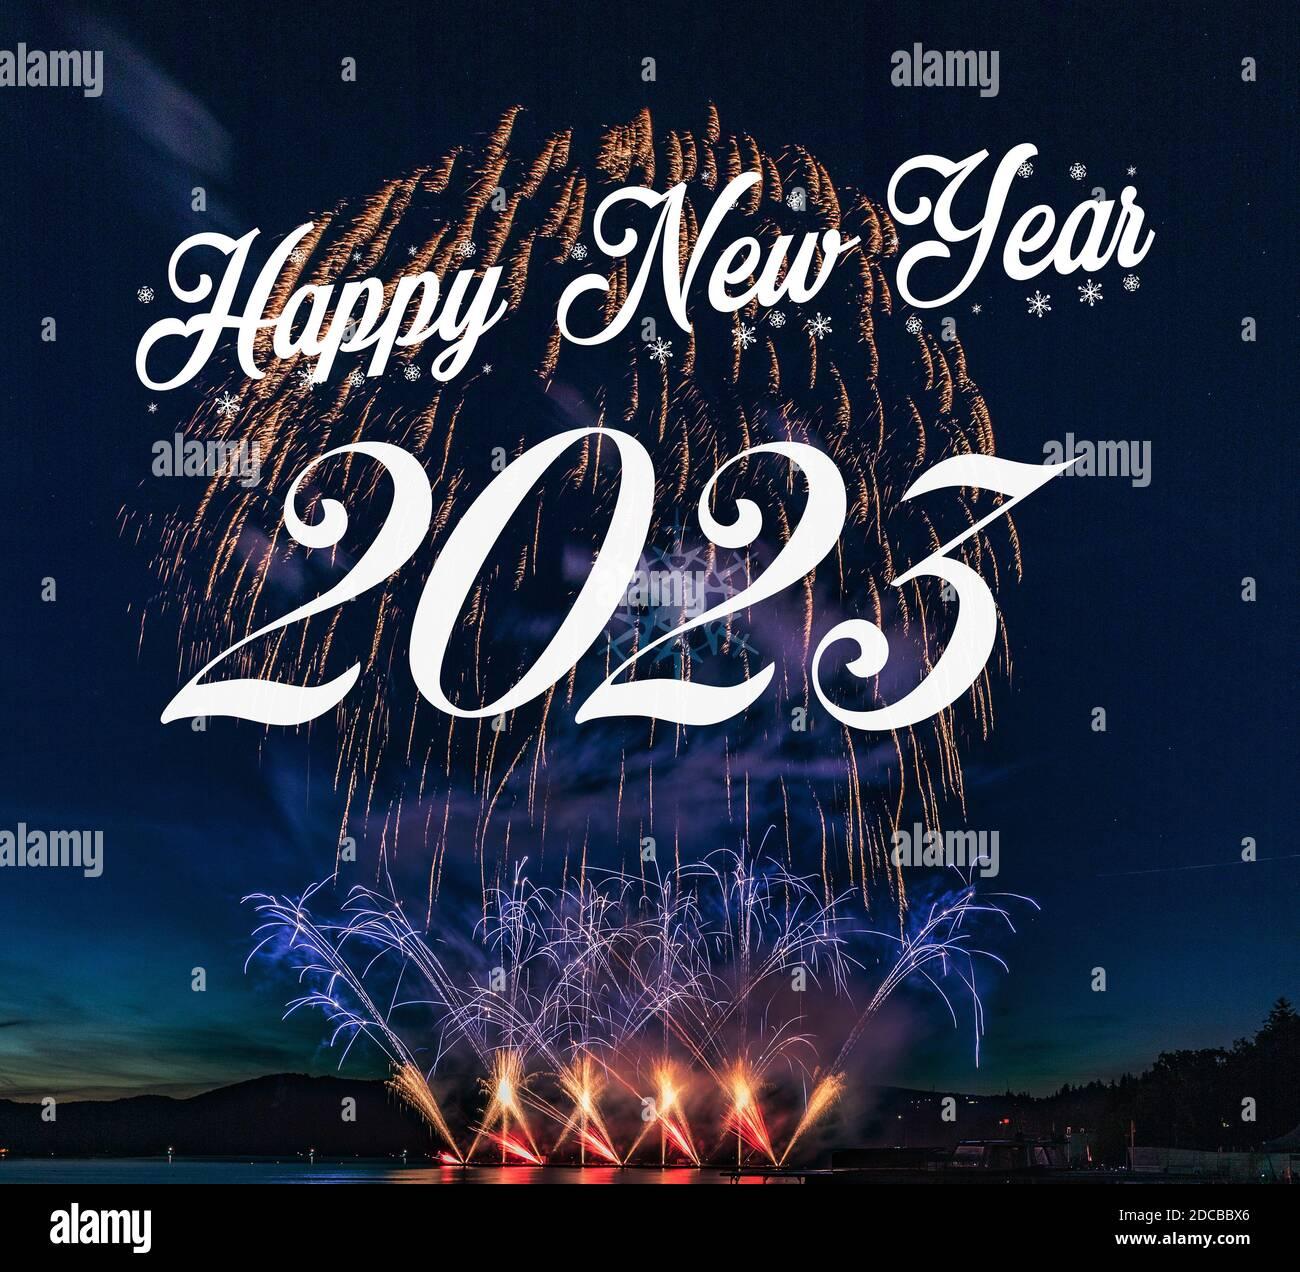 Happy New Year Image 2023 HD Wallpaper Naye Saal Kiimages Pics